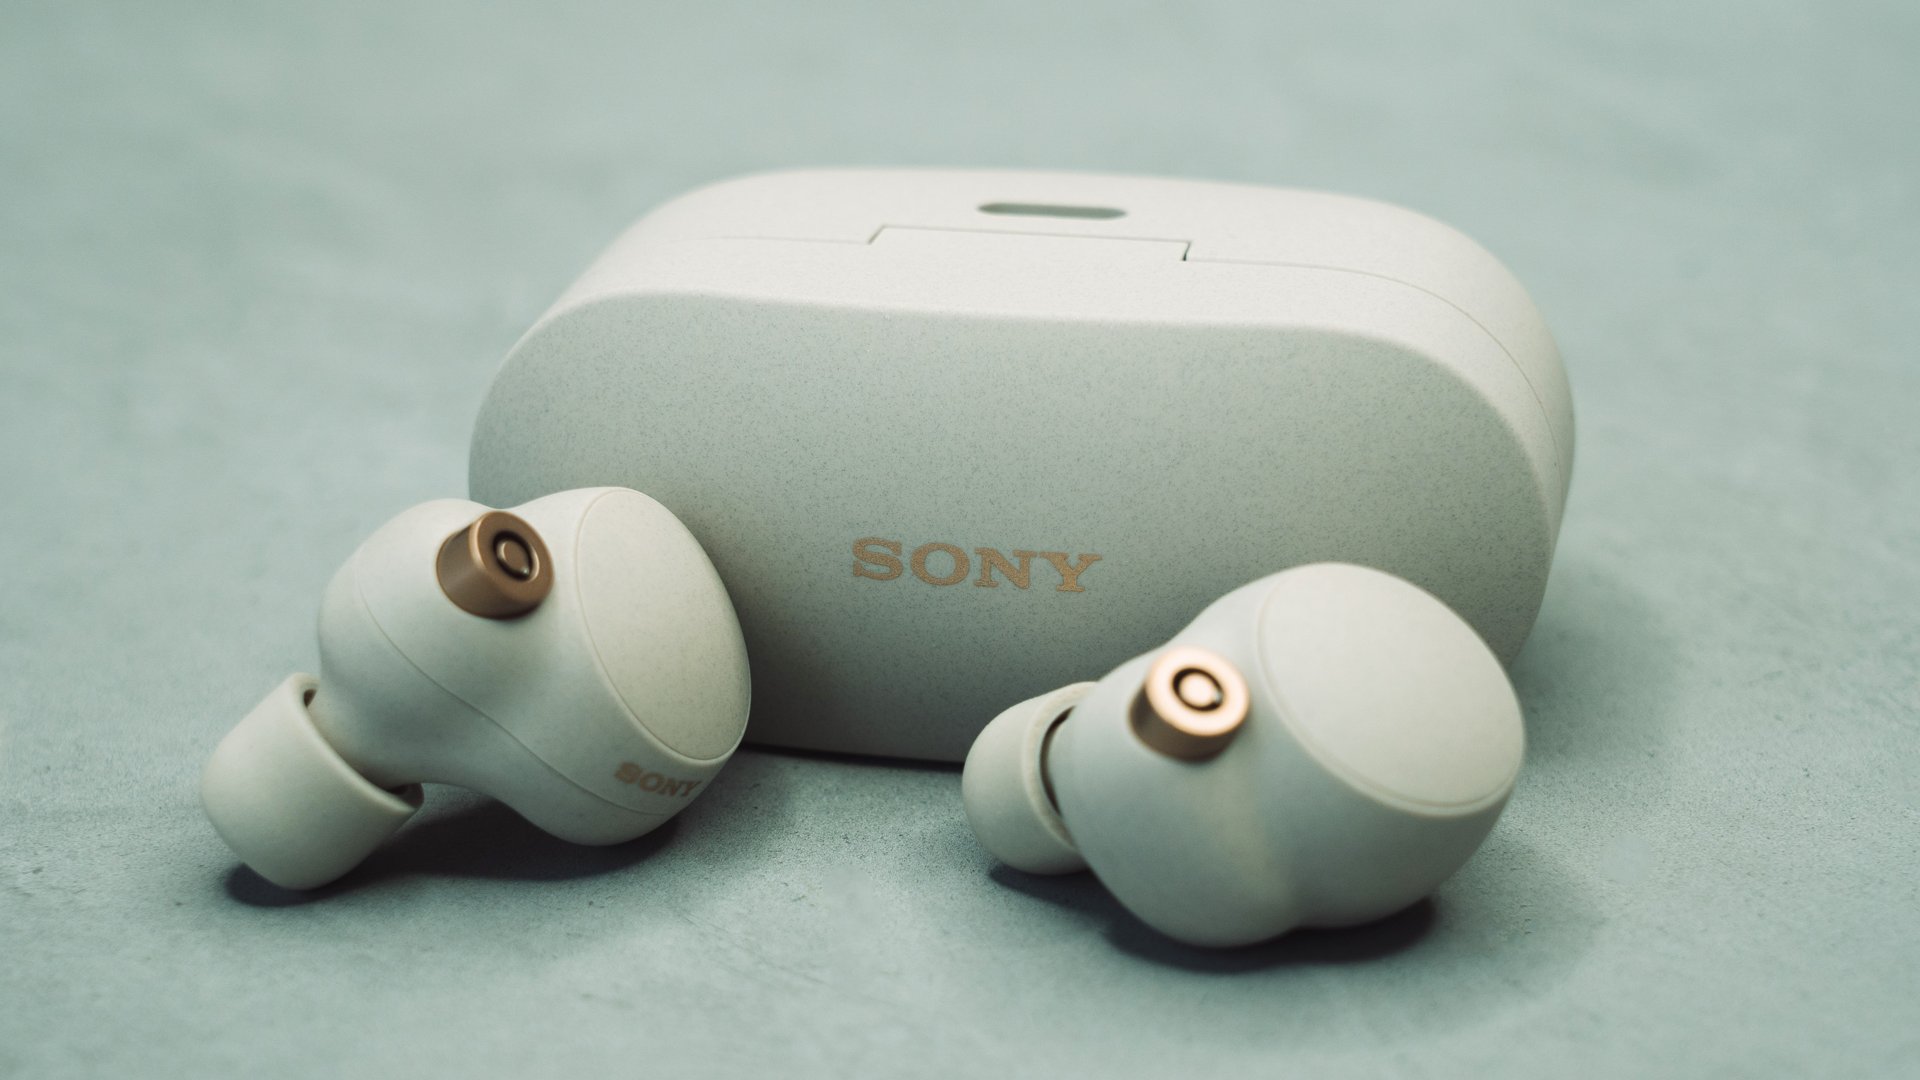 Sony WF-1000XM4 headphones on green surface